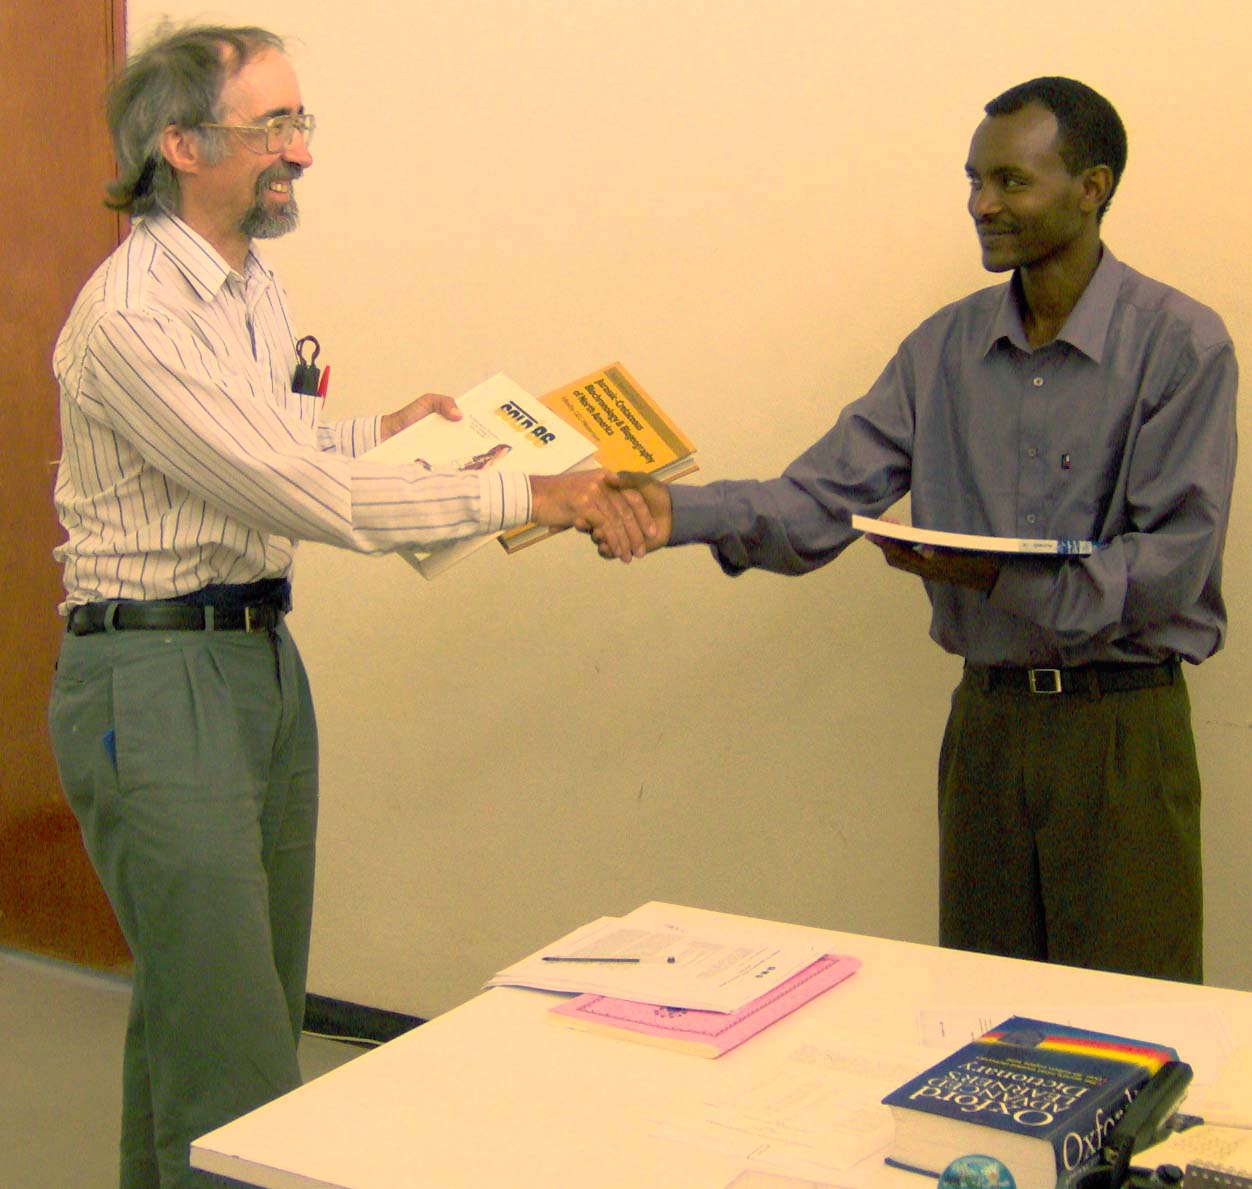 Mekelle, Ethiopia, 10 May 2005 [124 kb]